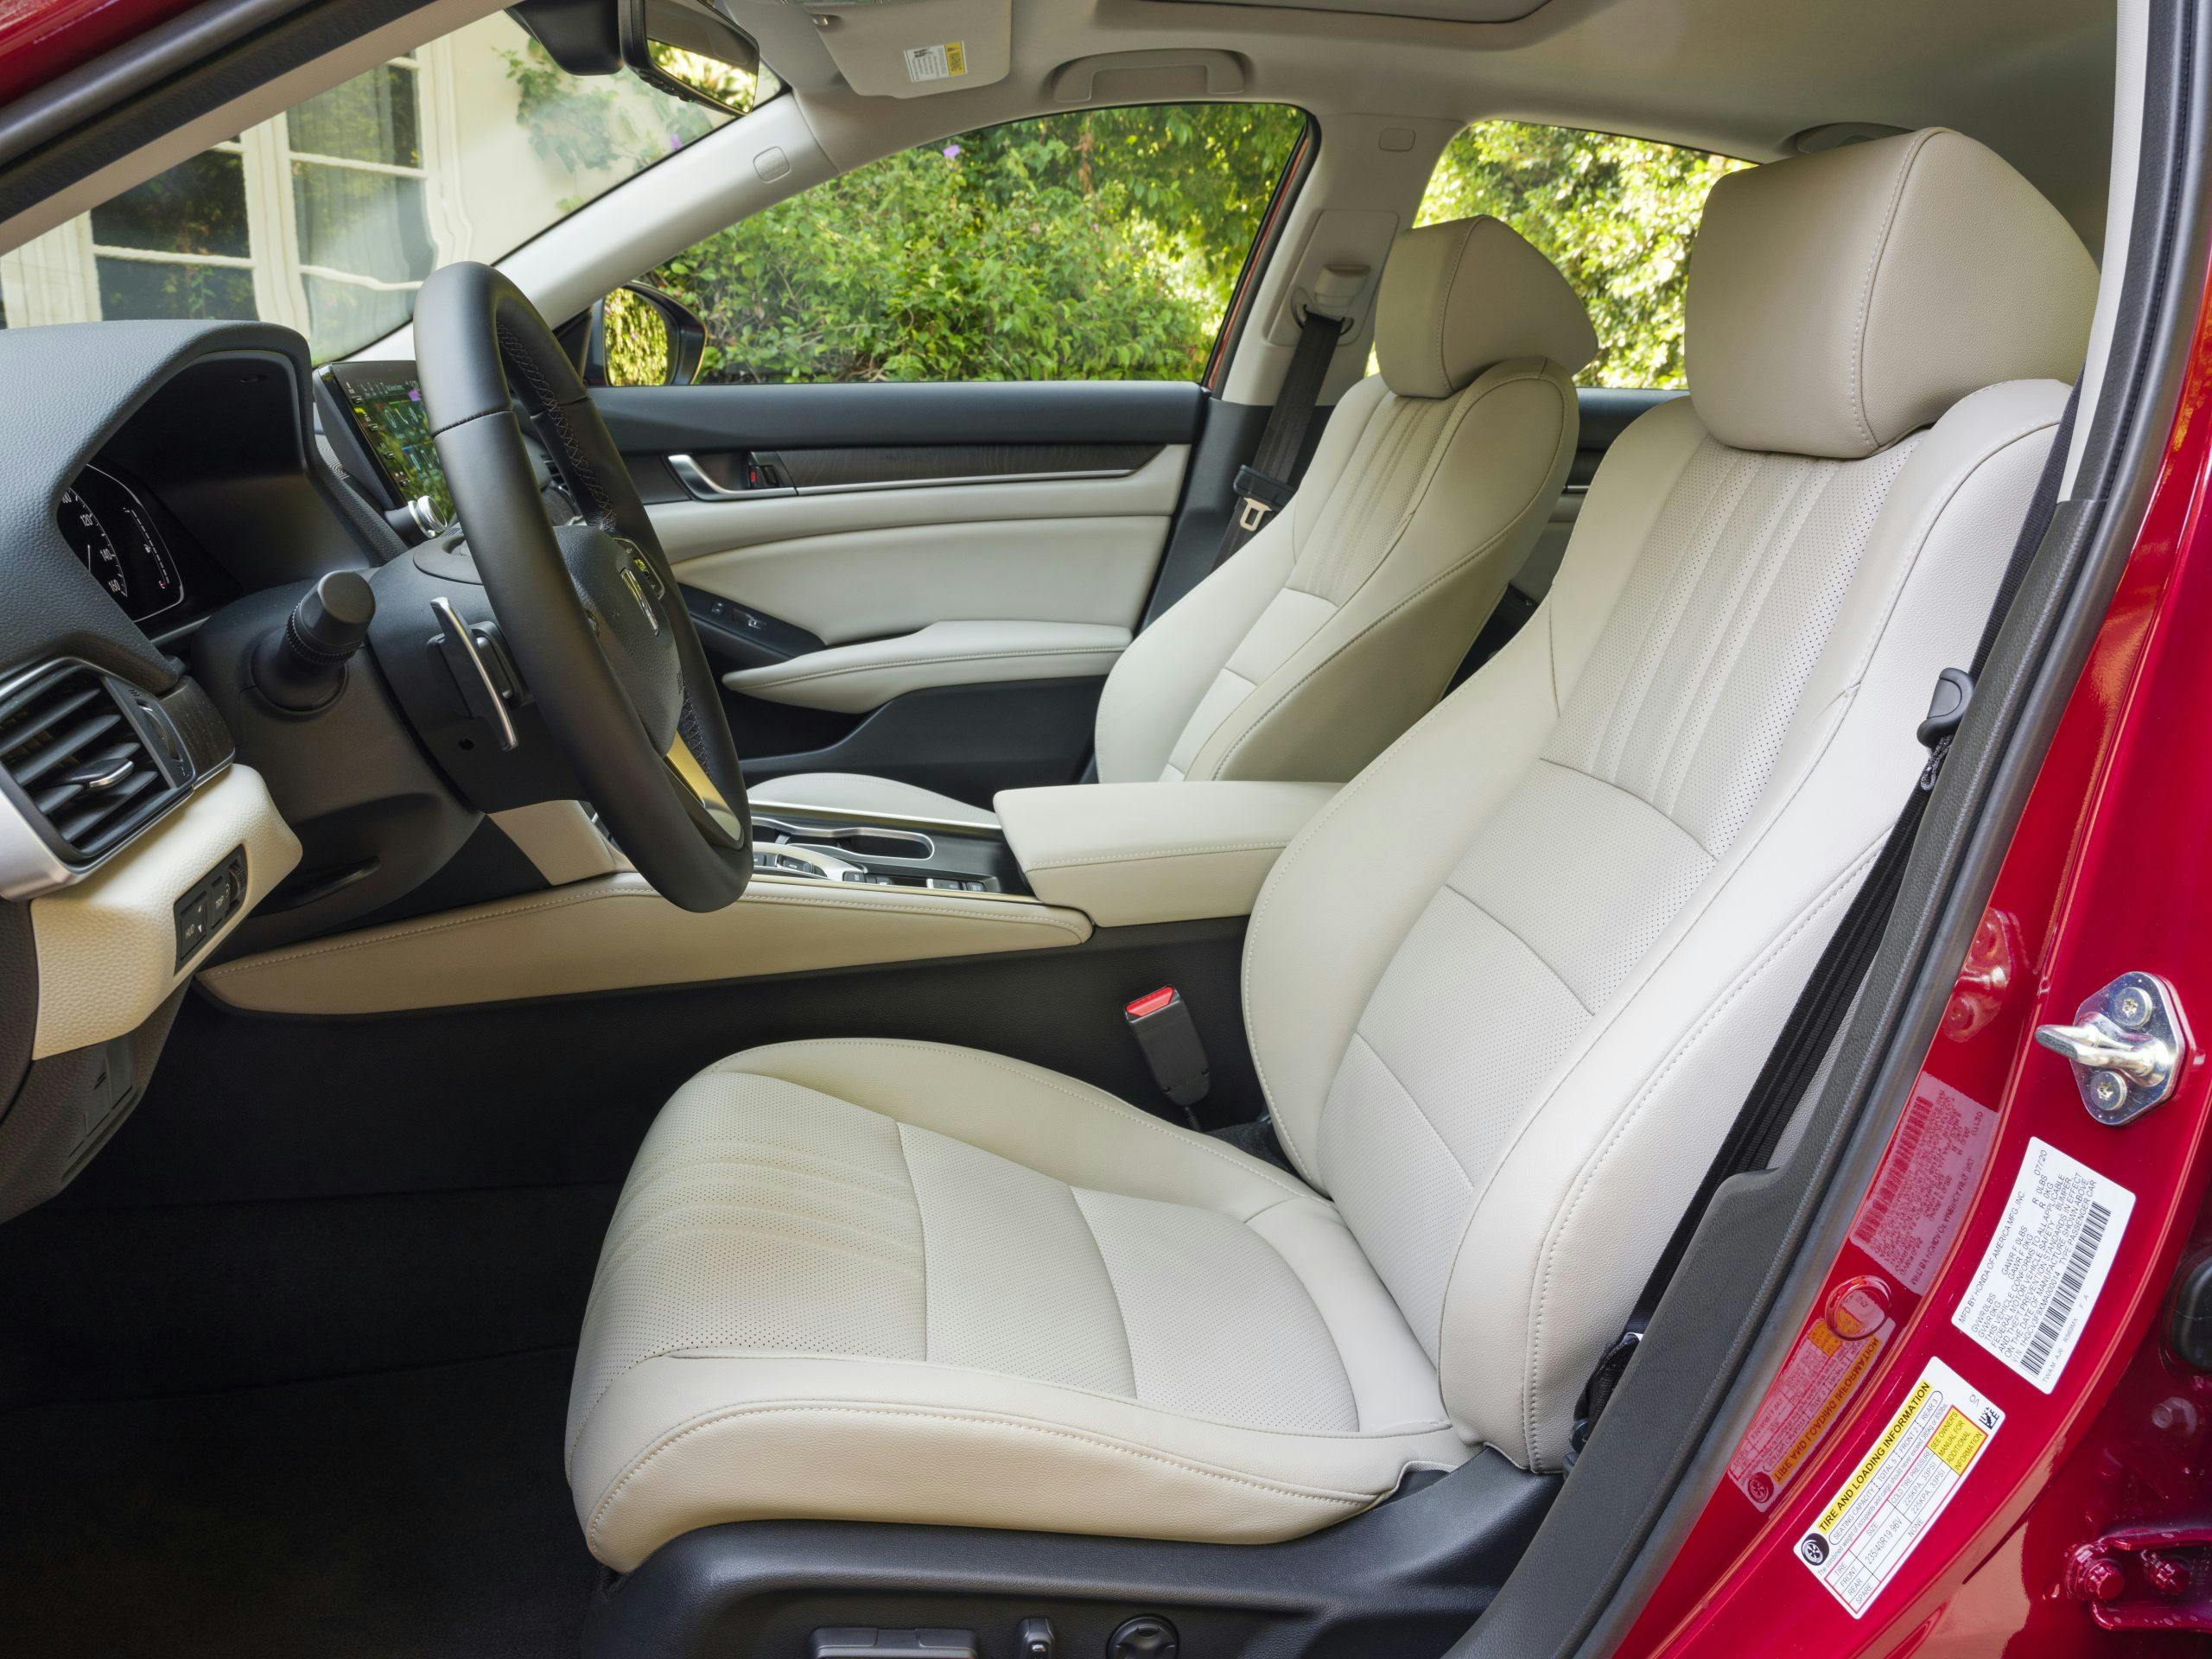 Honda Accord Hybrid interior seats